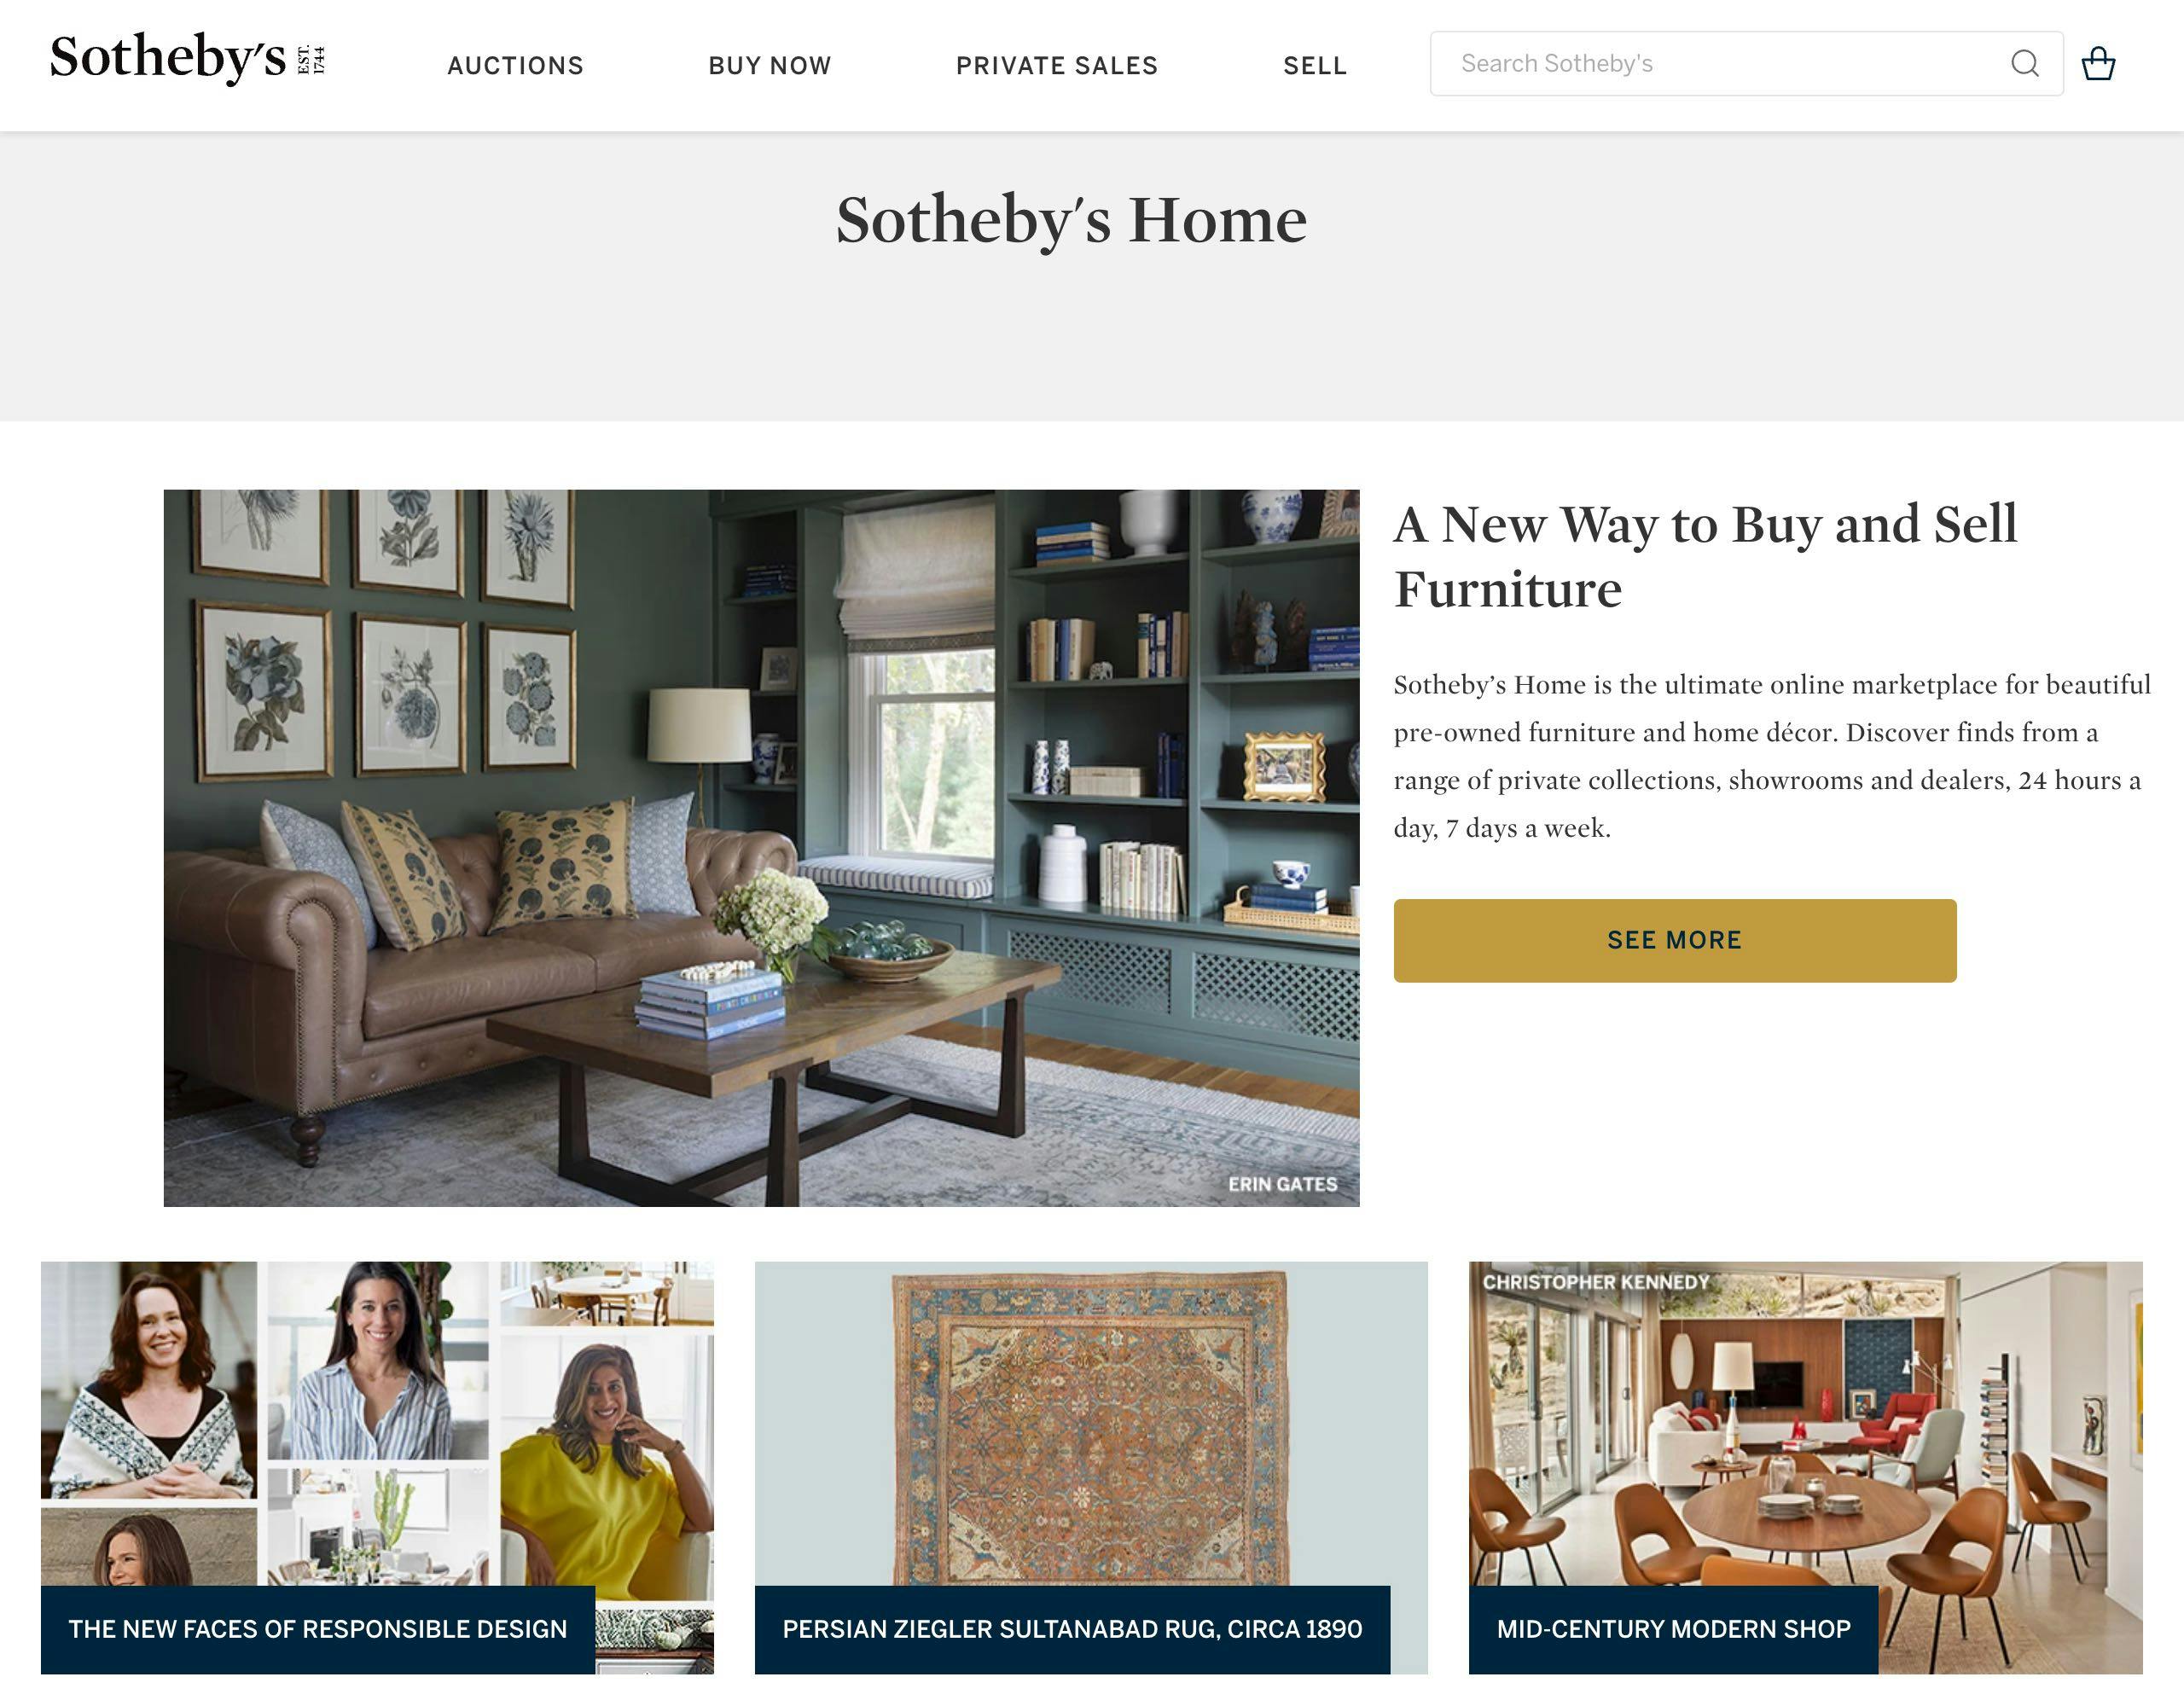 Sotheby's Home website